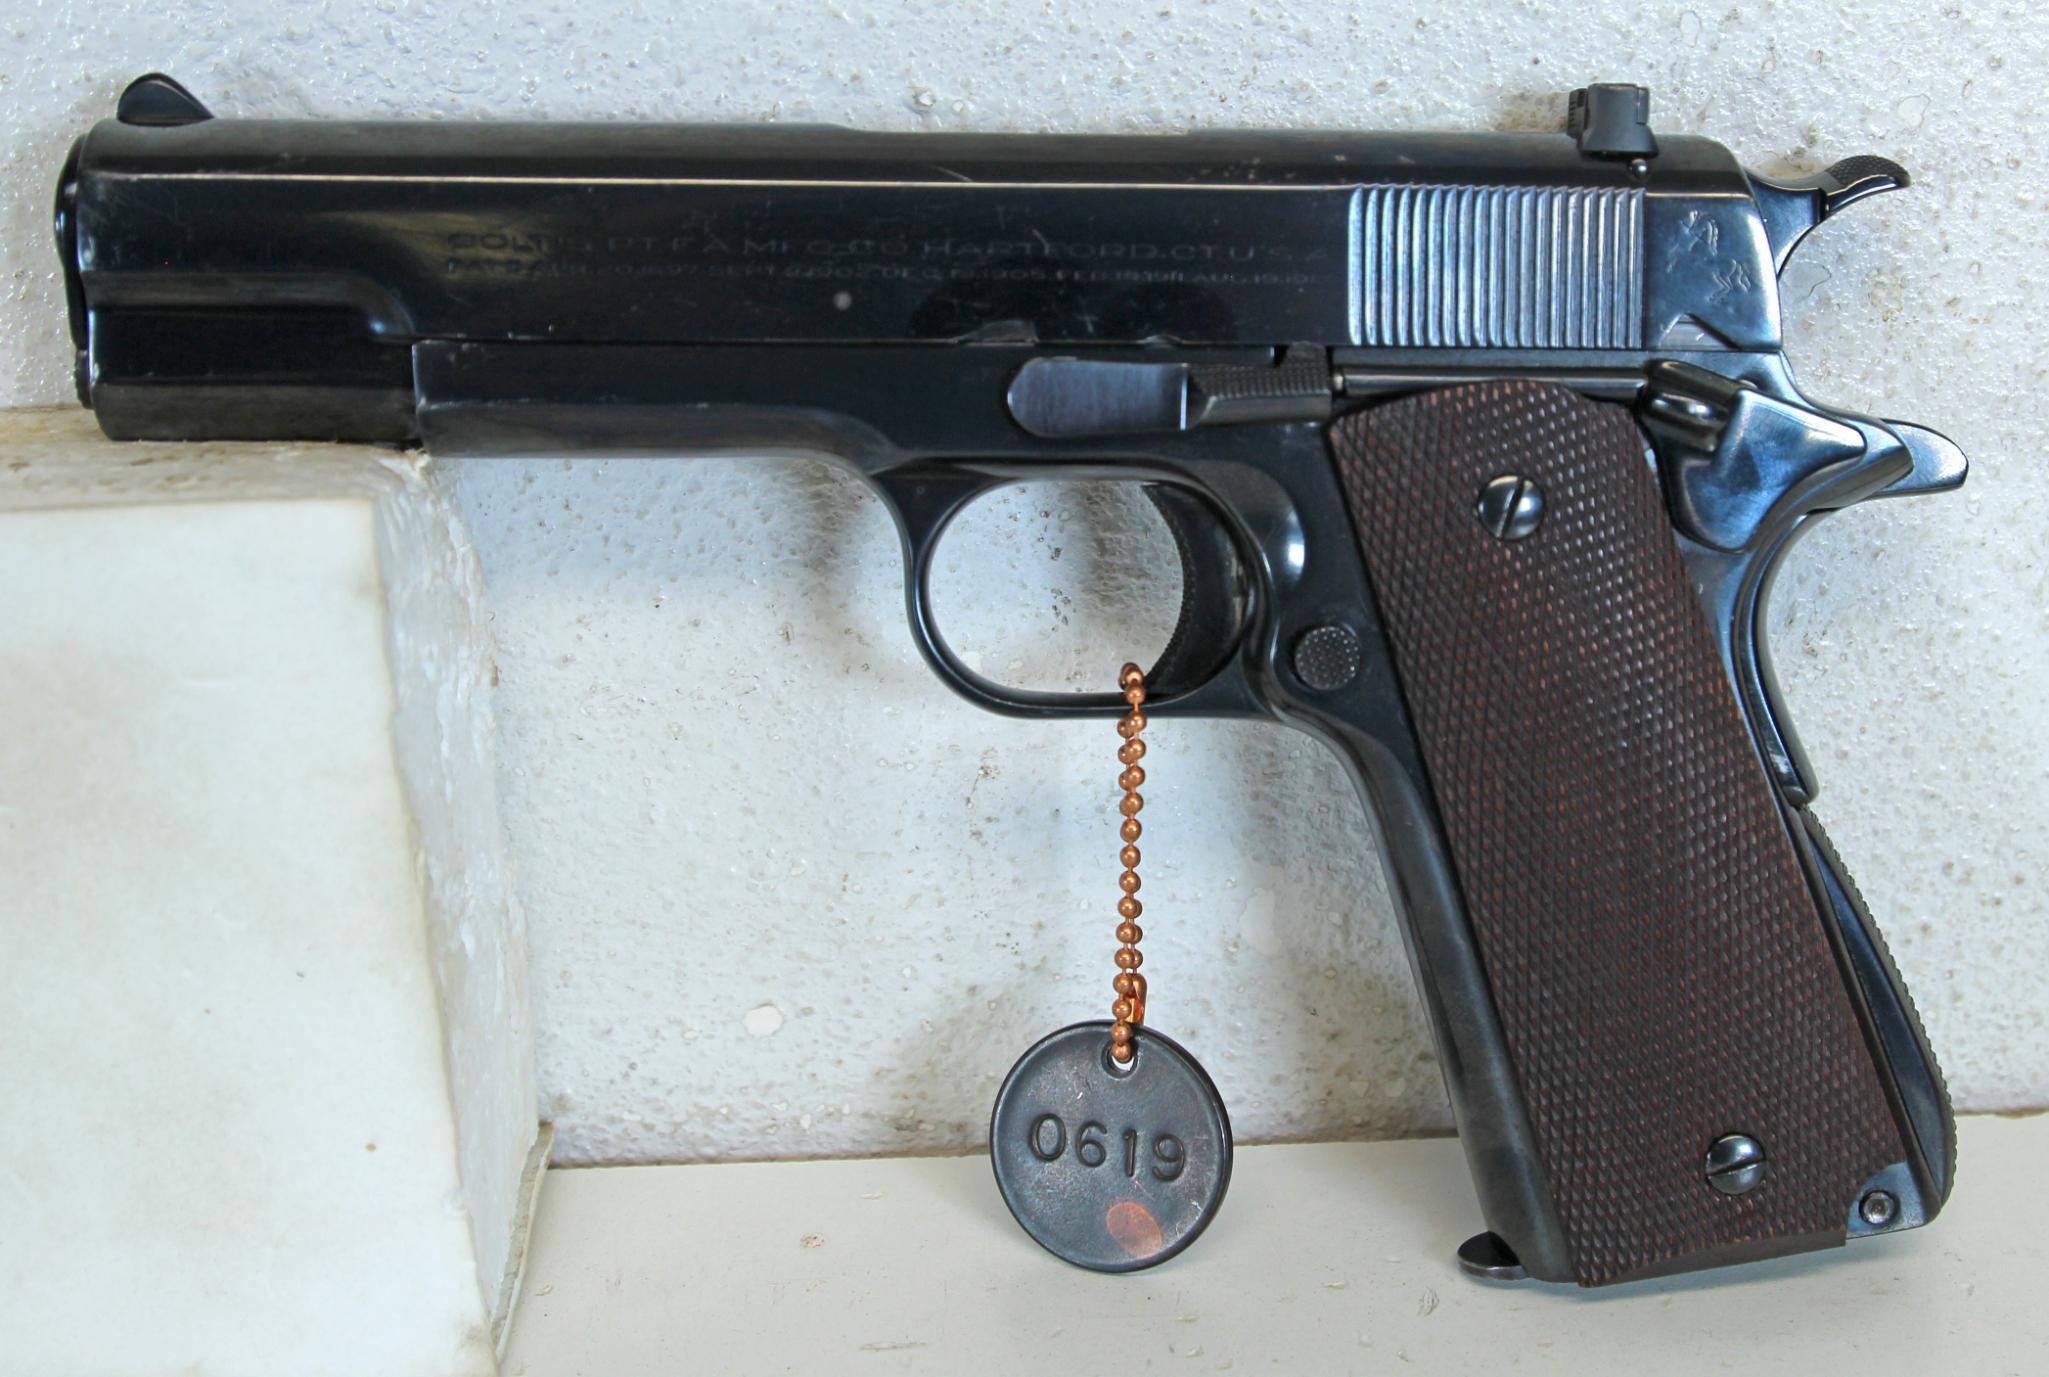 Pre-War 1938 Colt 1911A1 Ace Model .22 LR Semi-Auto Pistol Mfg. 1938 - Only about 11,000 were